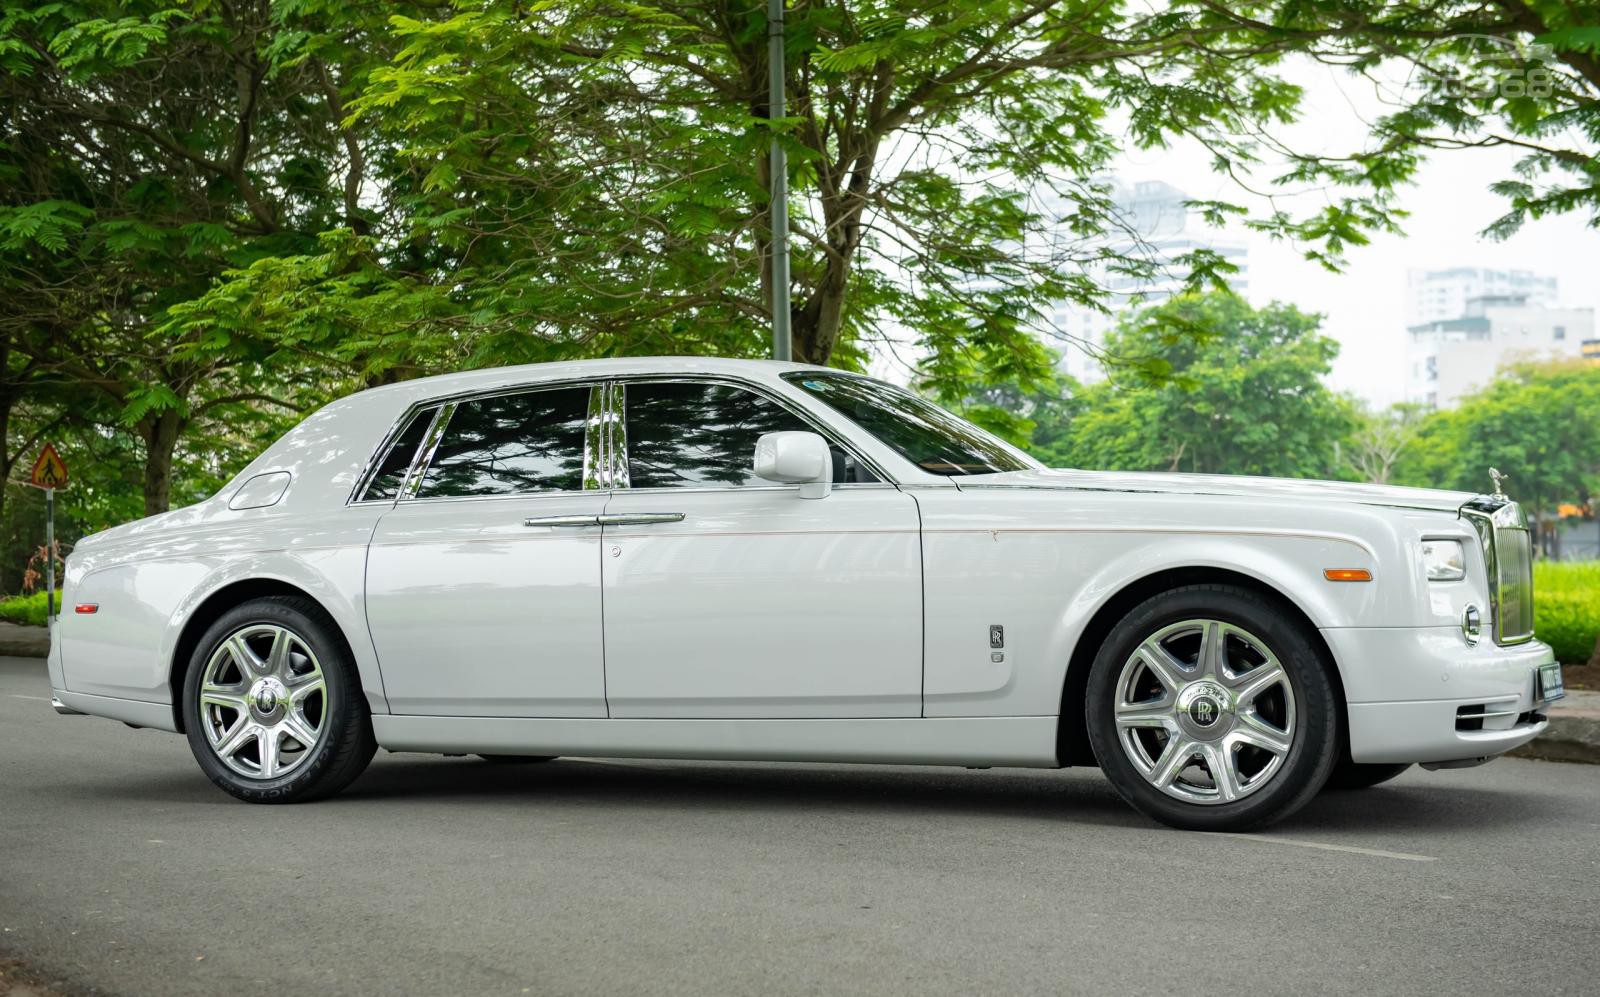 Rolls-Royce Phantom Spirit of Ecstasy Edition 2011 - Bán Xe Rolls-Royce Phantom Spirit of Ecstasy Edition 2011, màu trắng, bản kỉ niệm 100 năm